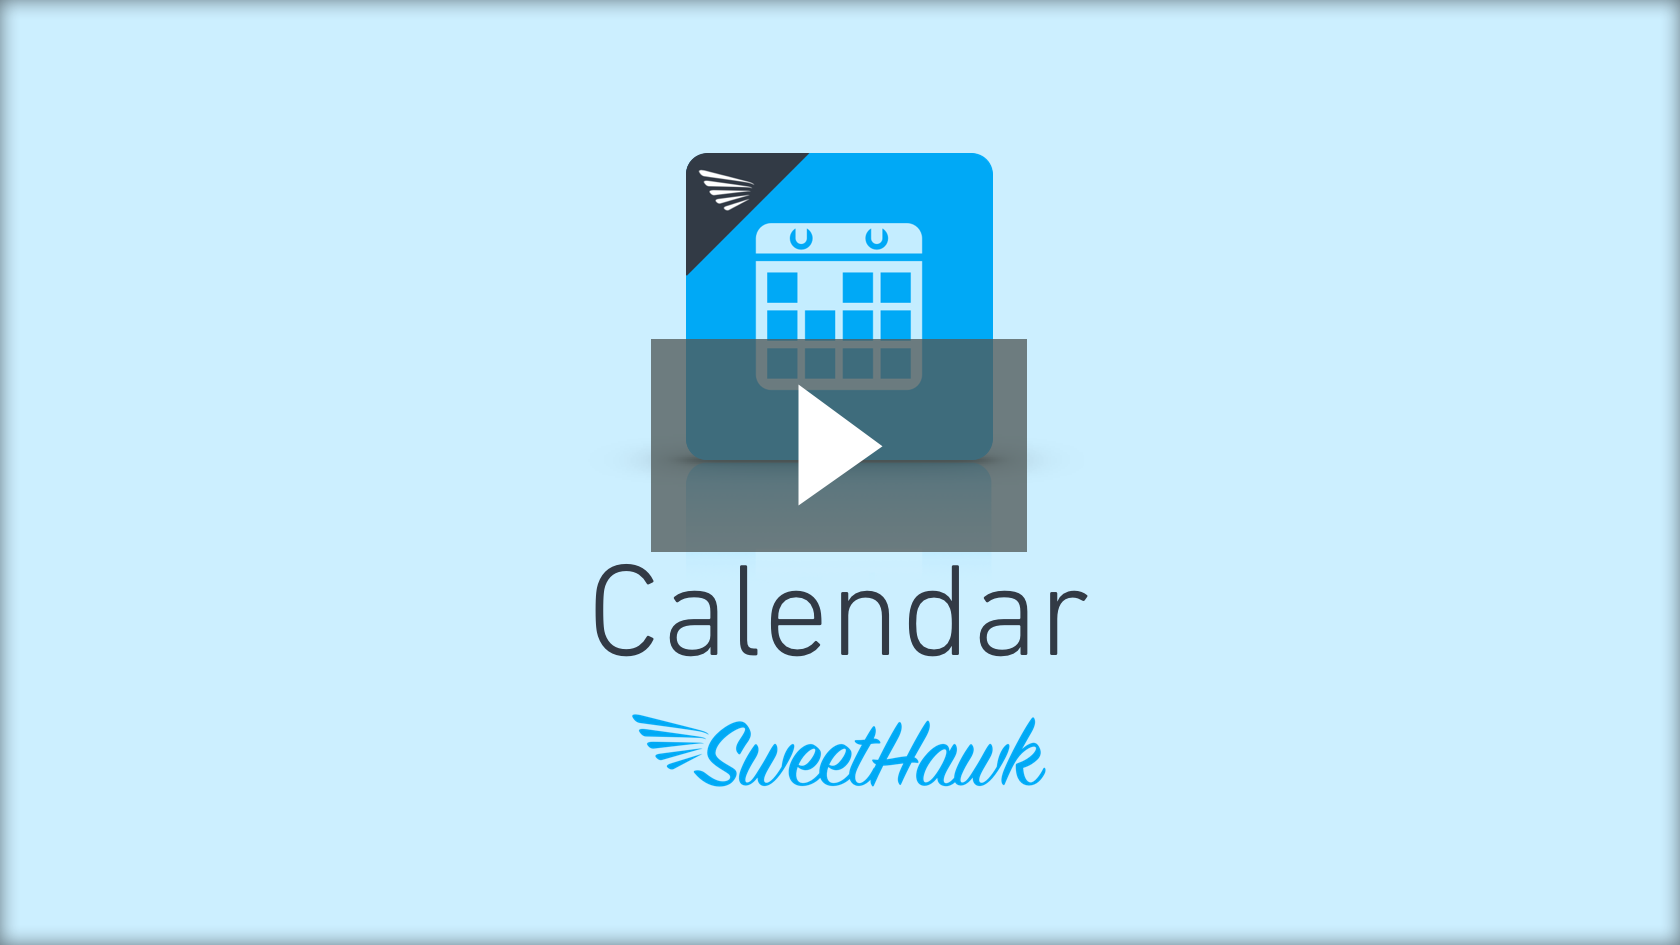 Play Calendar video